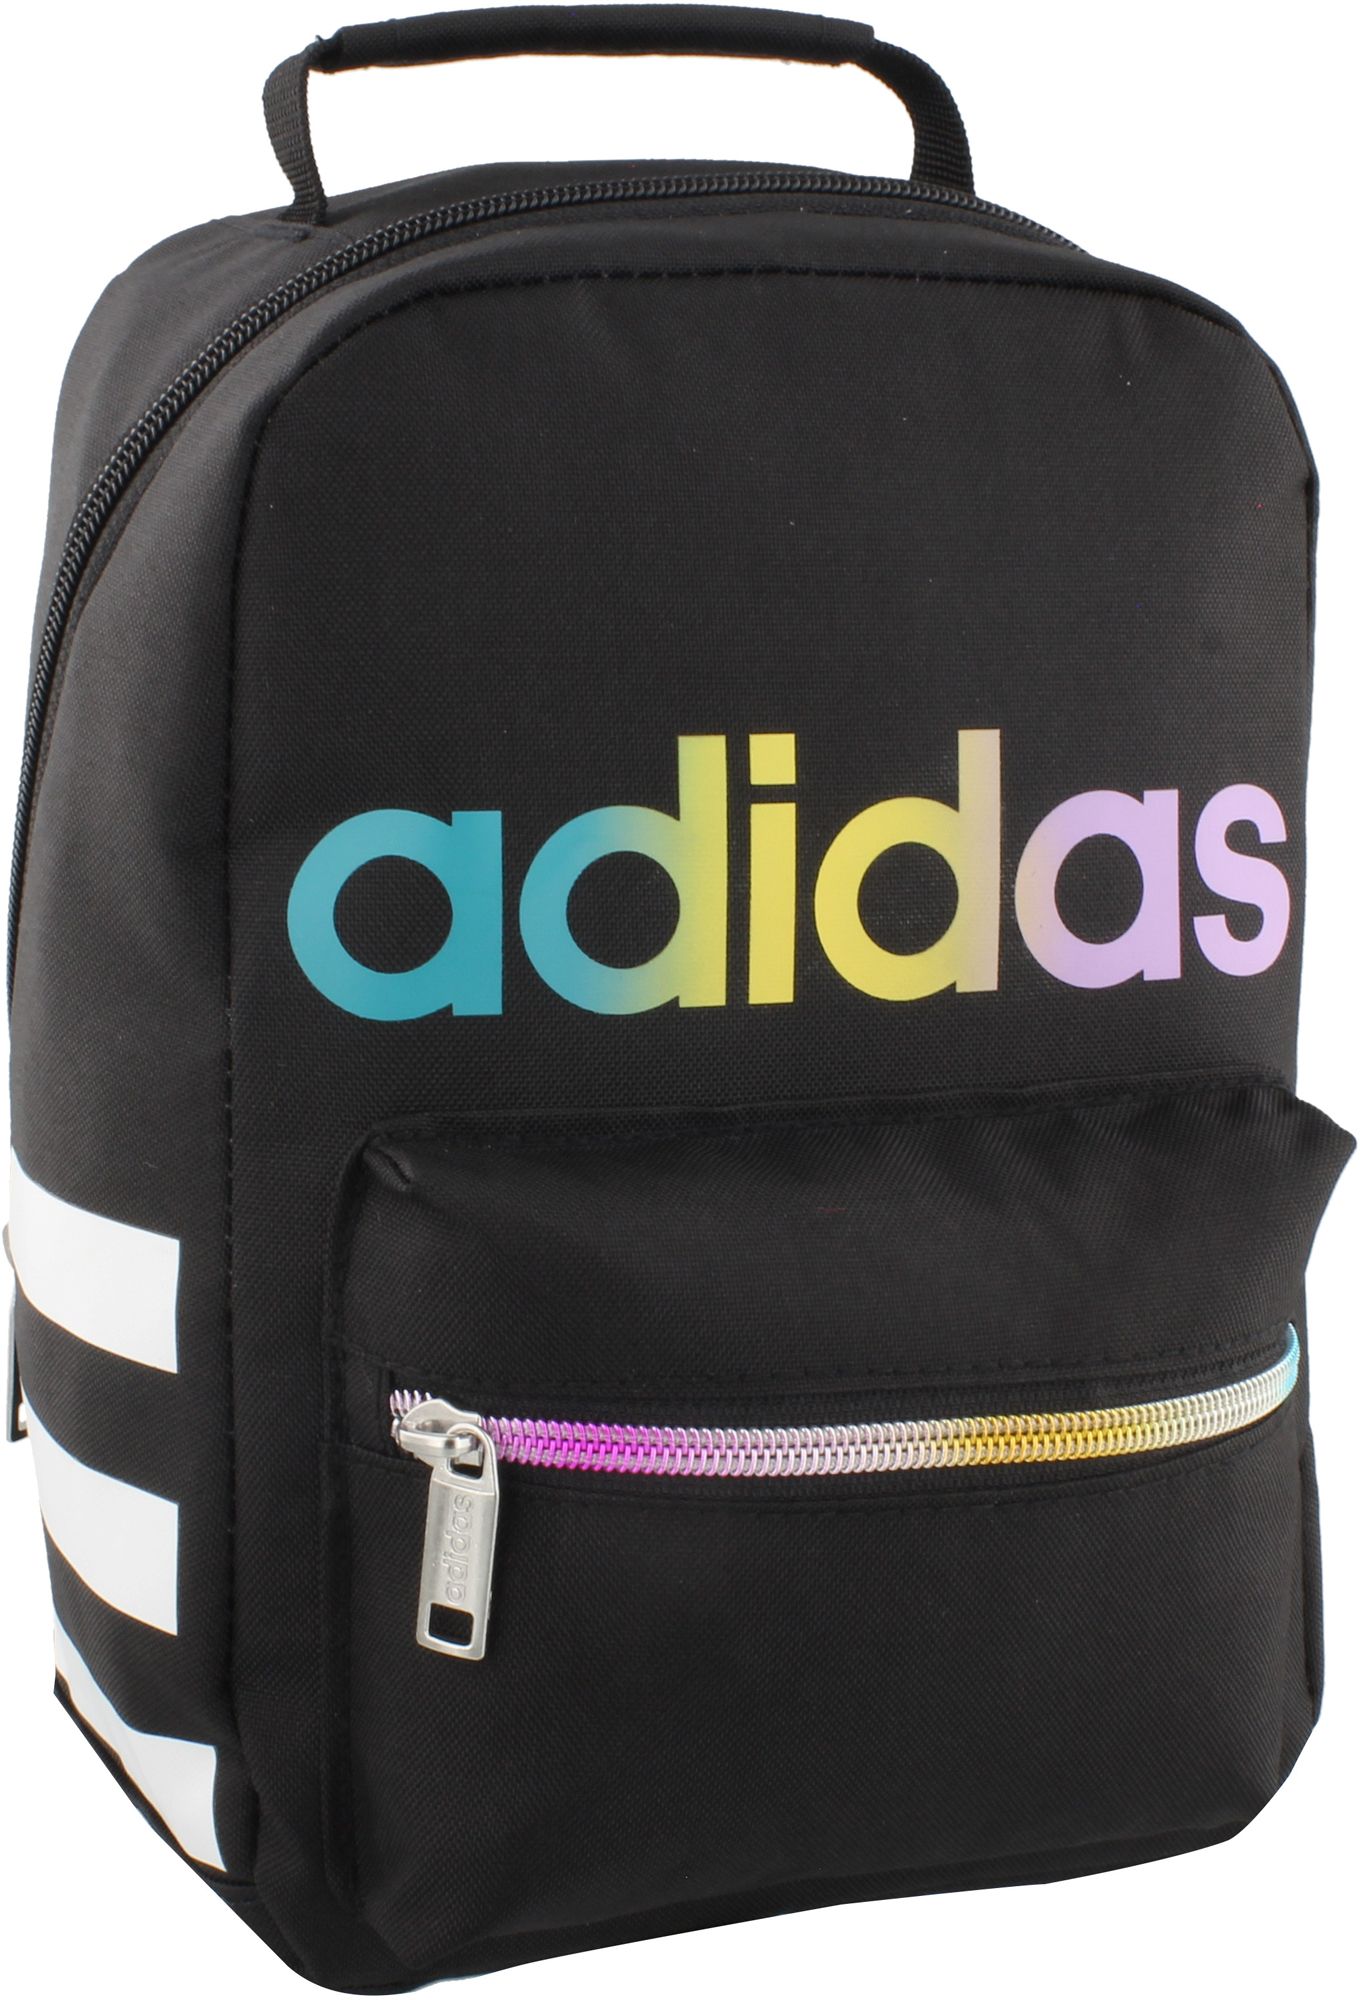 adidas mesh backpack rainbow